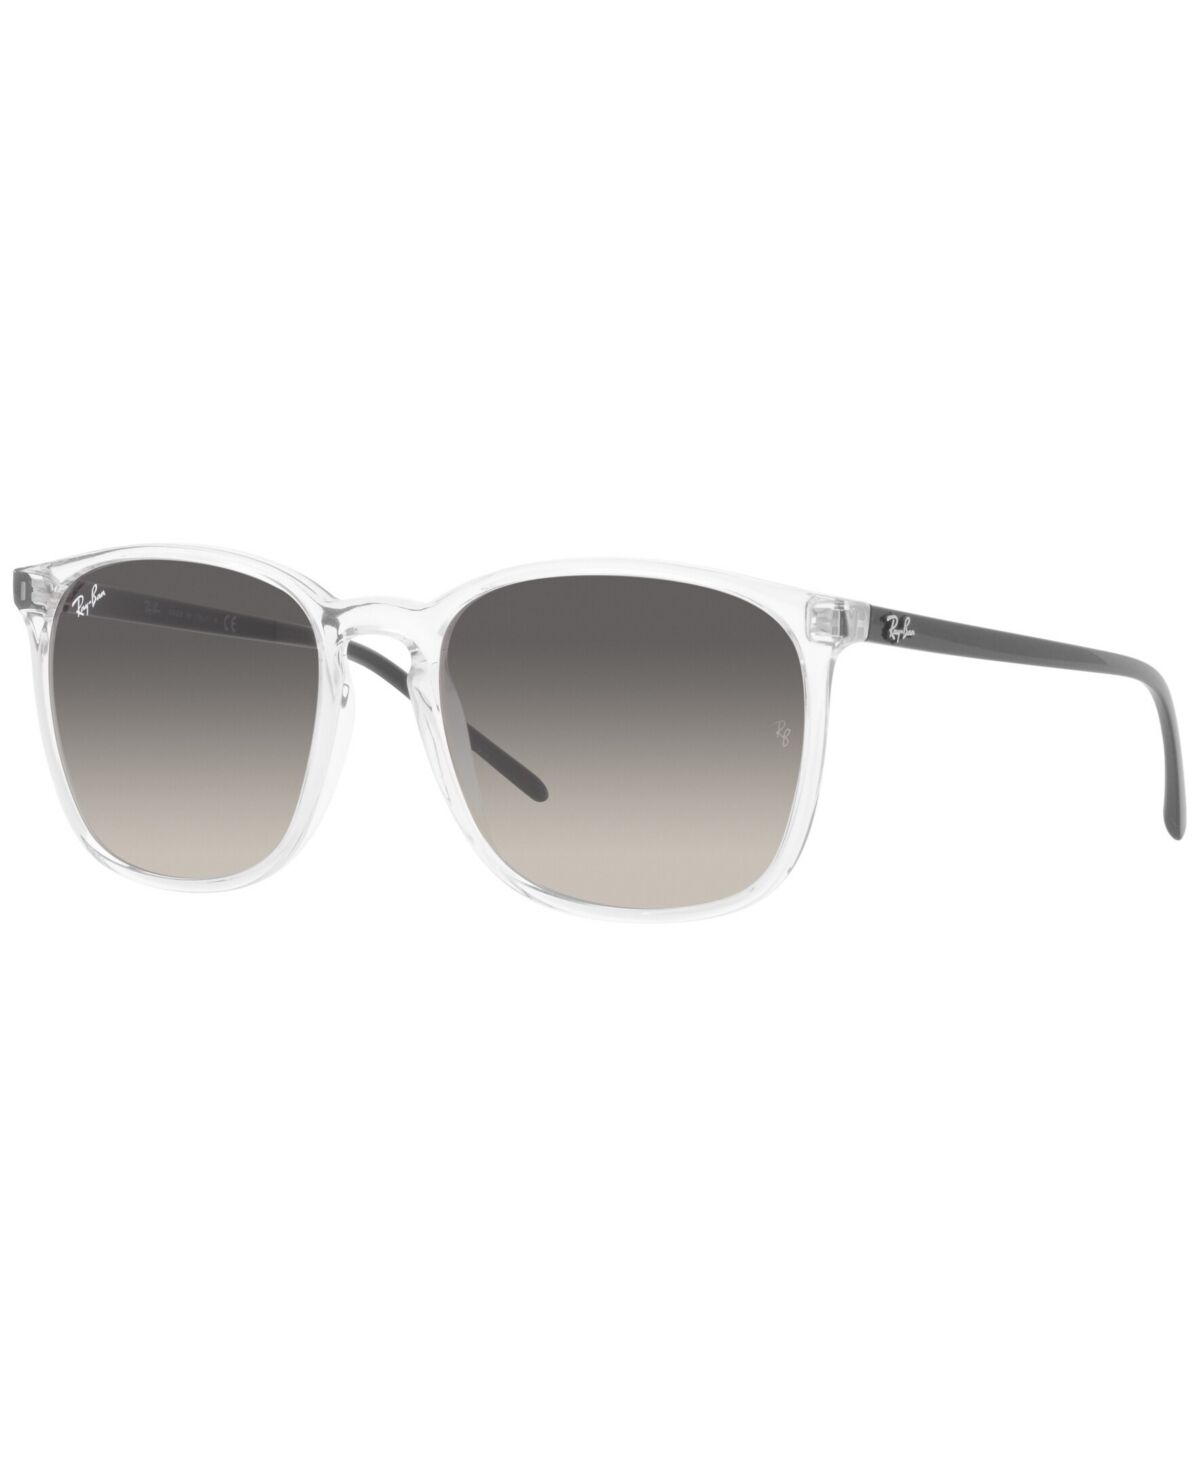 Ray-Ban Unisex Sunglasses, RB4387 56 - Transparent